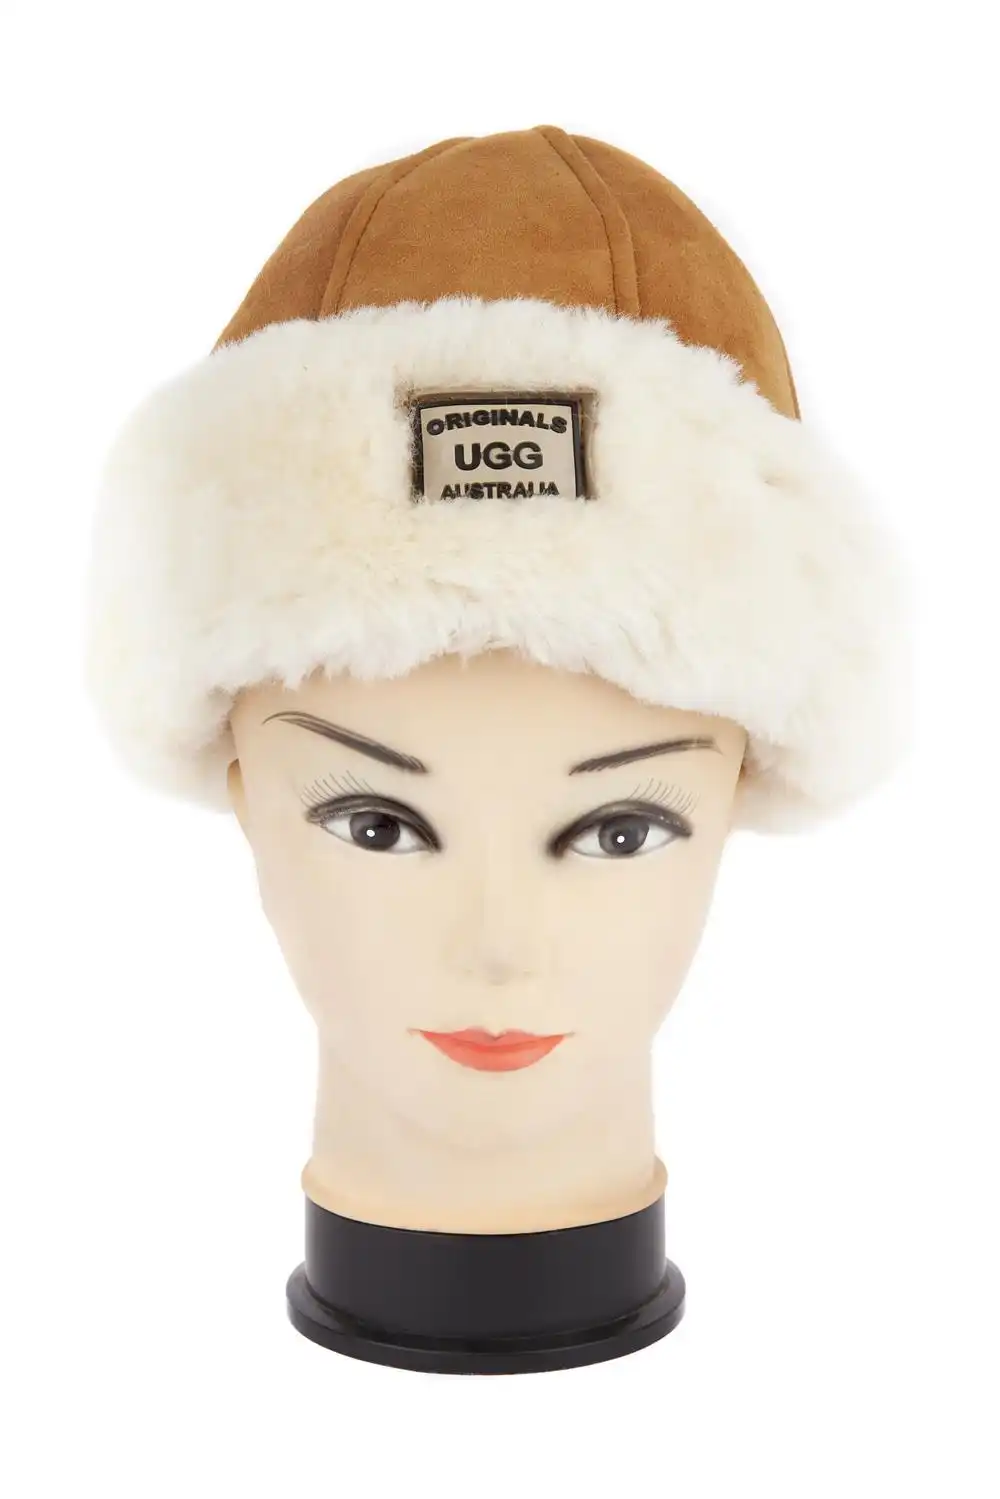 Original Ugg Australia Chestnut Hat